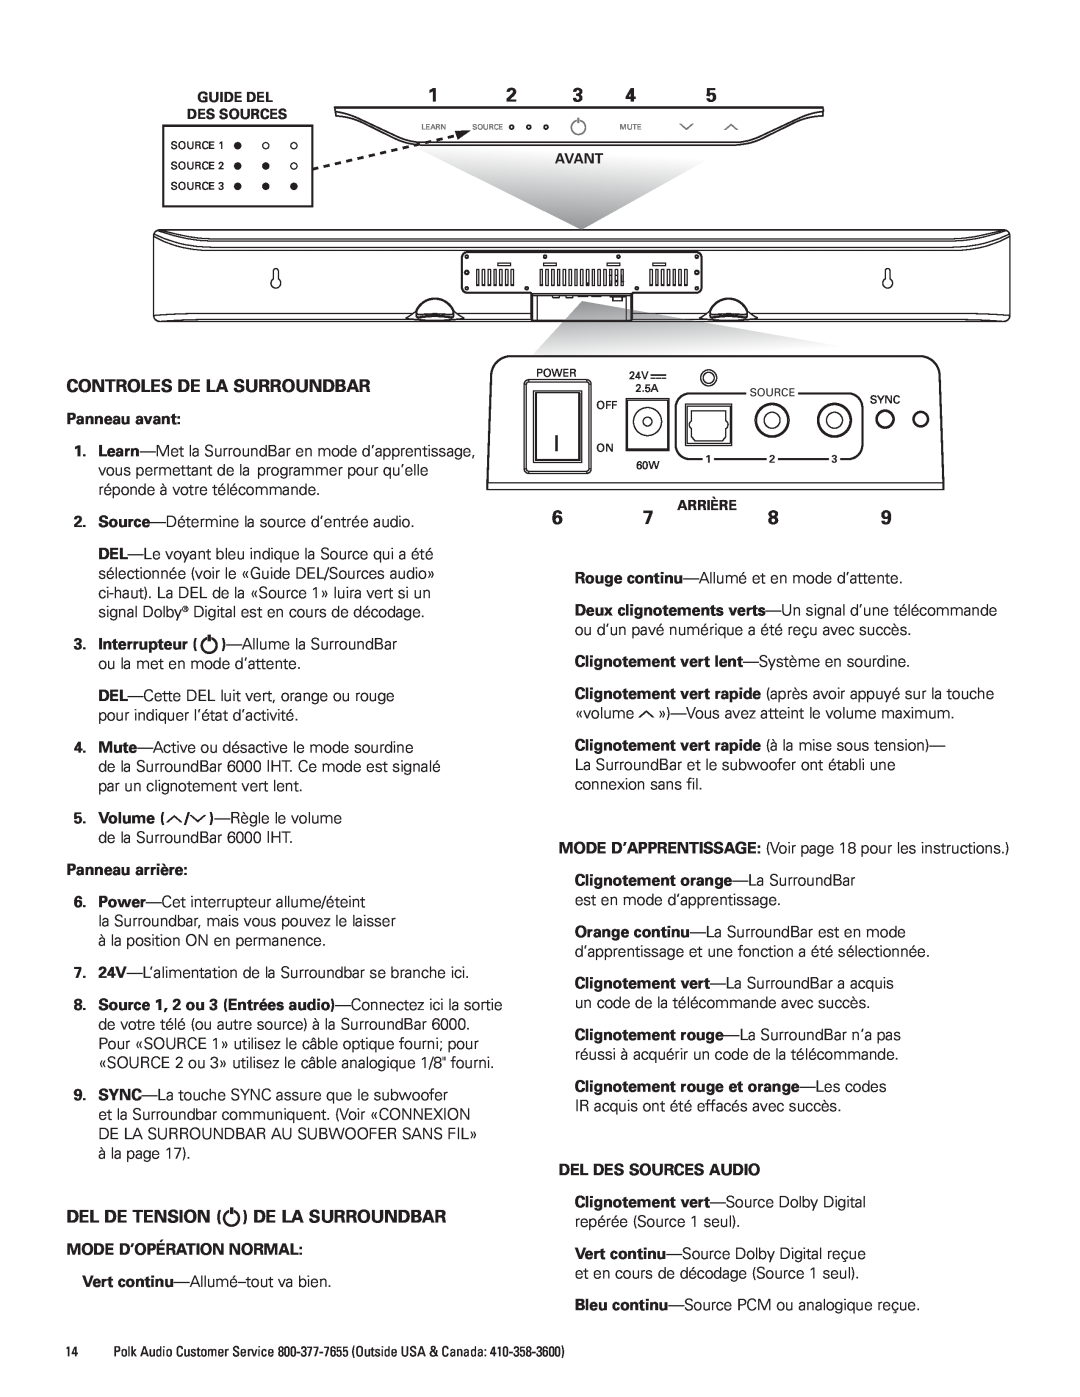 Polk Audio 6000 manual Controles De La Surroundbar, Del De Tension De La Surroundbar 